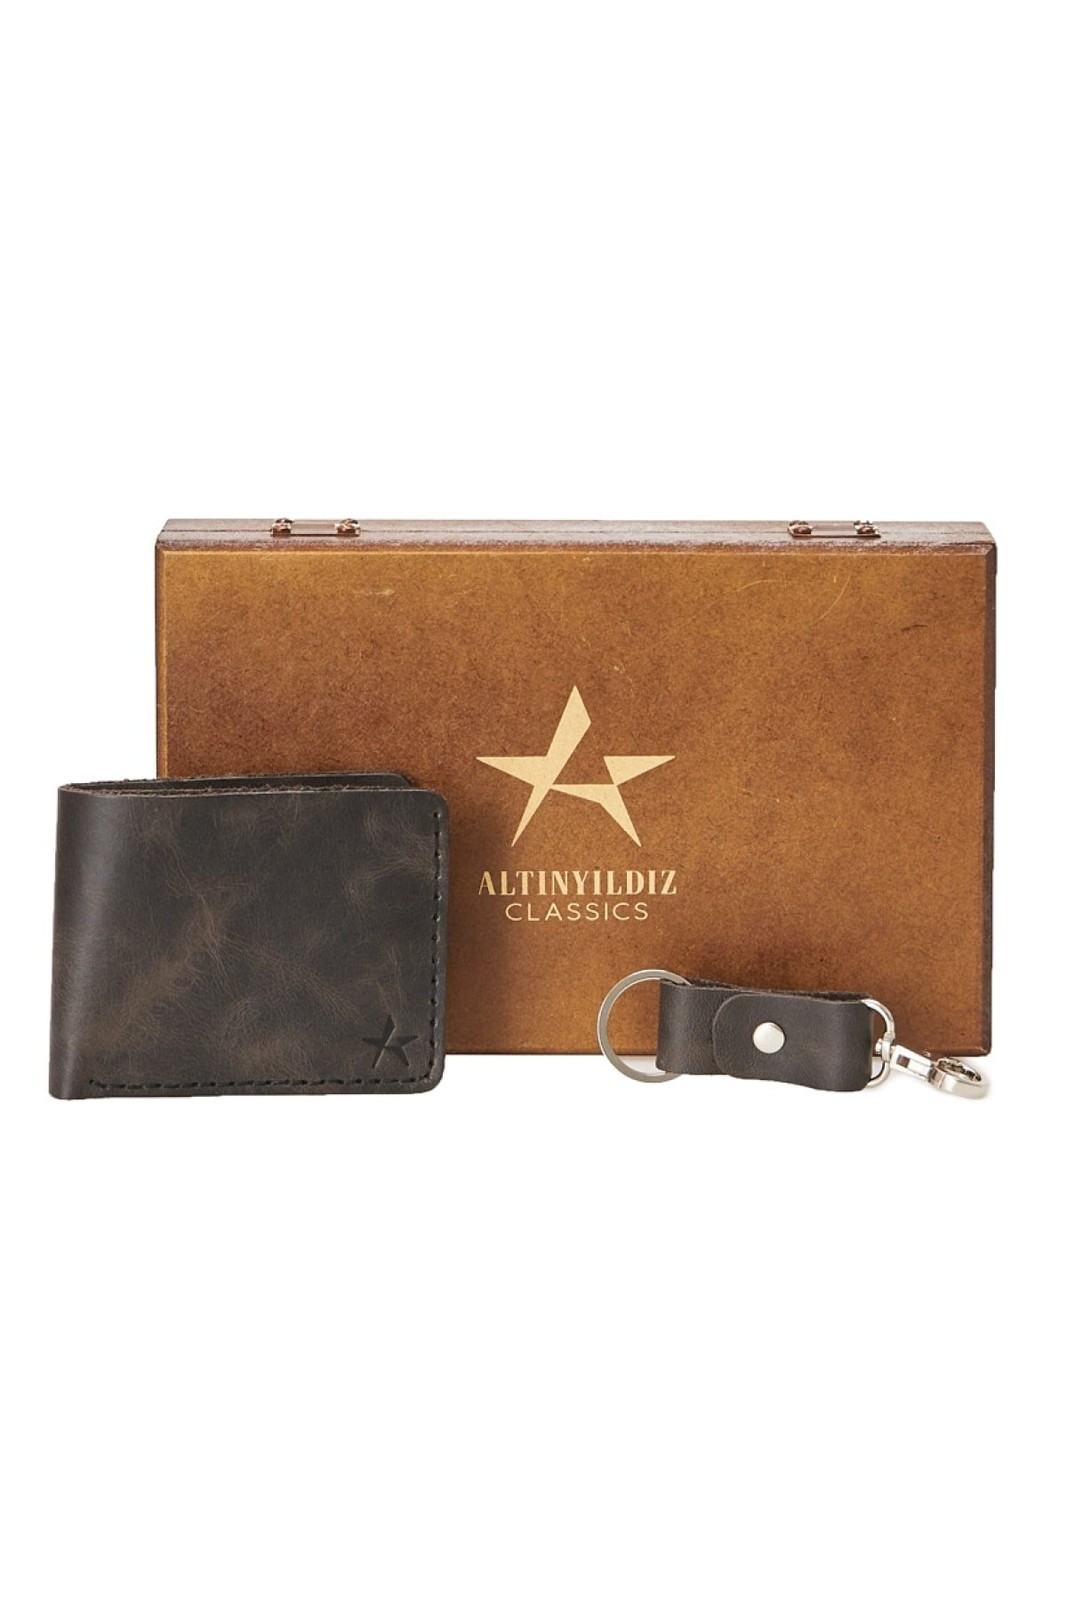 ALTINYILDIZ CLASSICS Men's Black 100% Genuine Leather Wallet Keychain